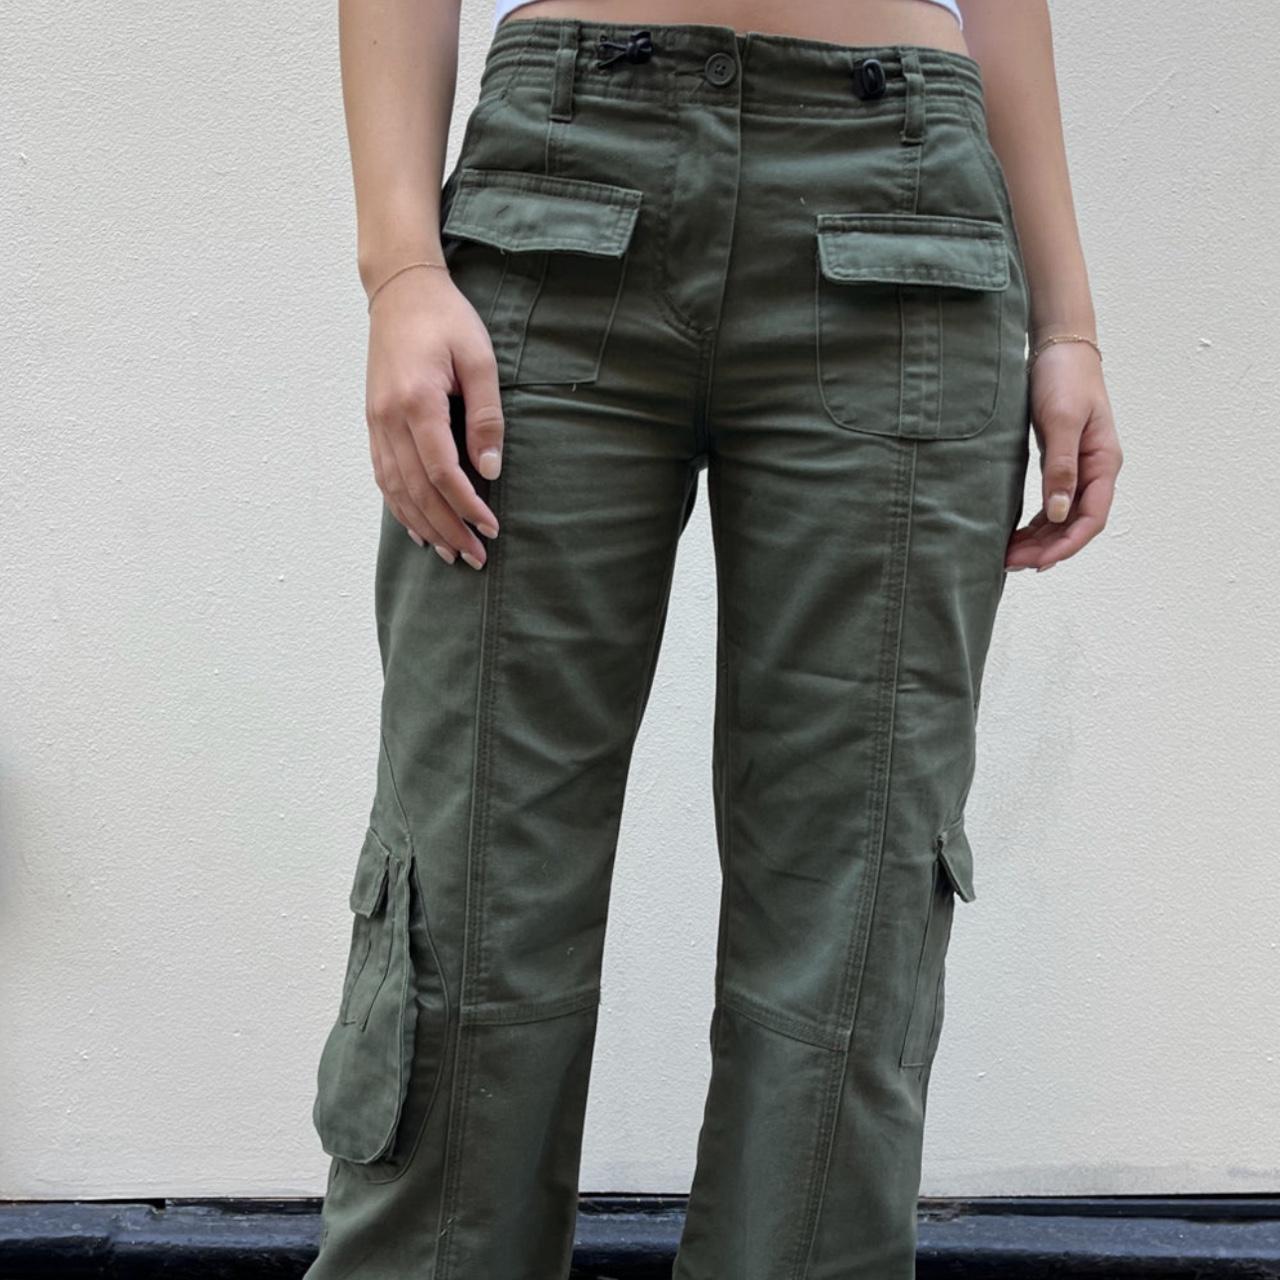 brandy green kim cargo pants worn only once - Depop